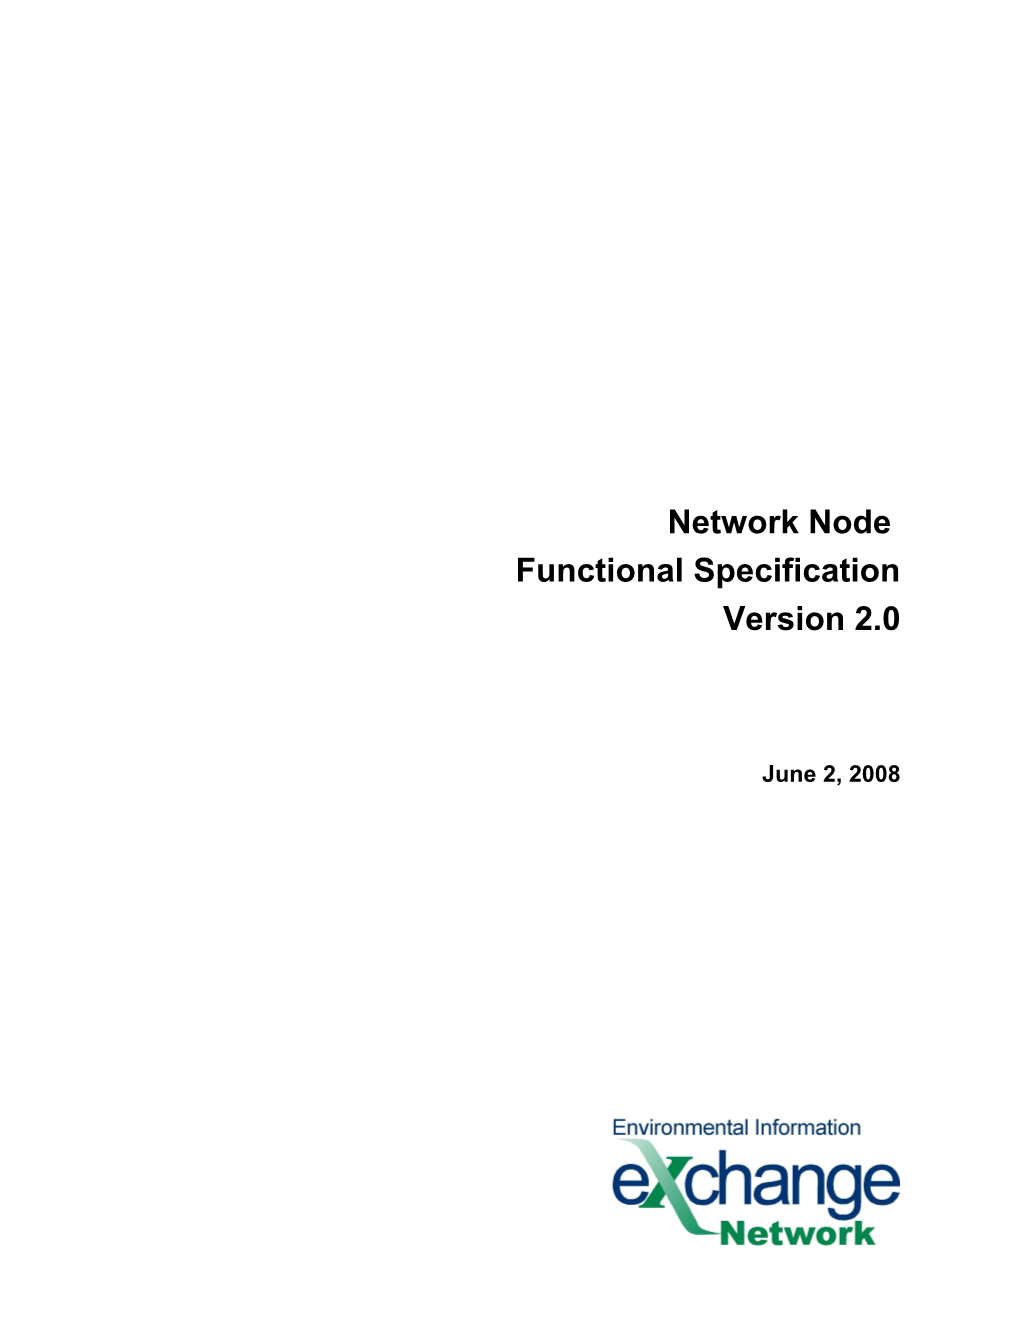 Network Node V2.0 Functional Specification